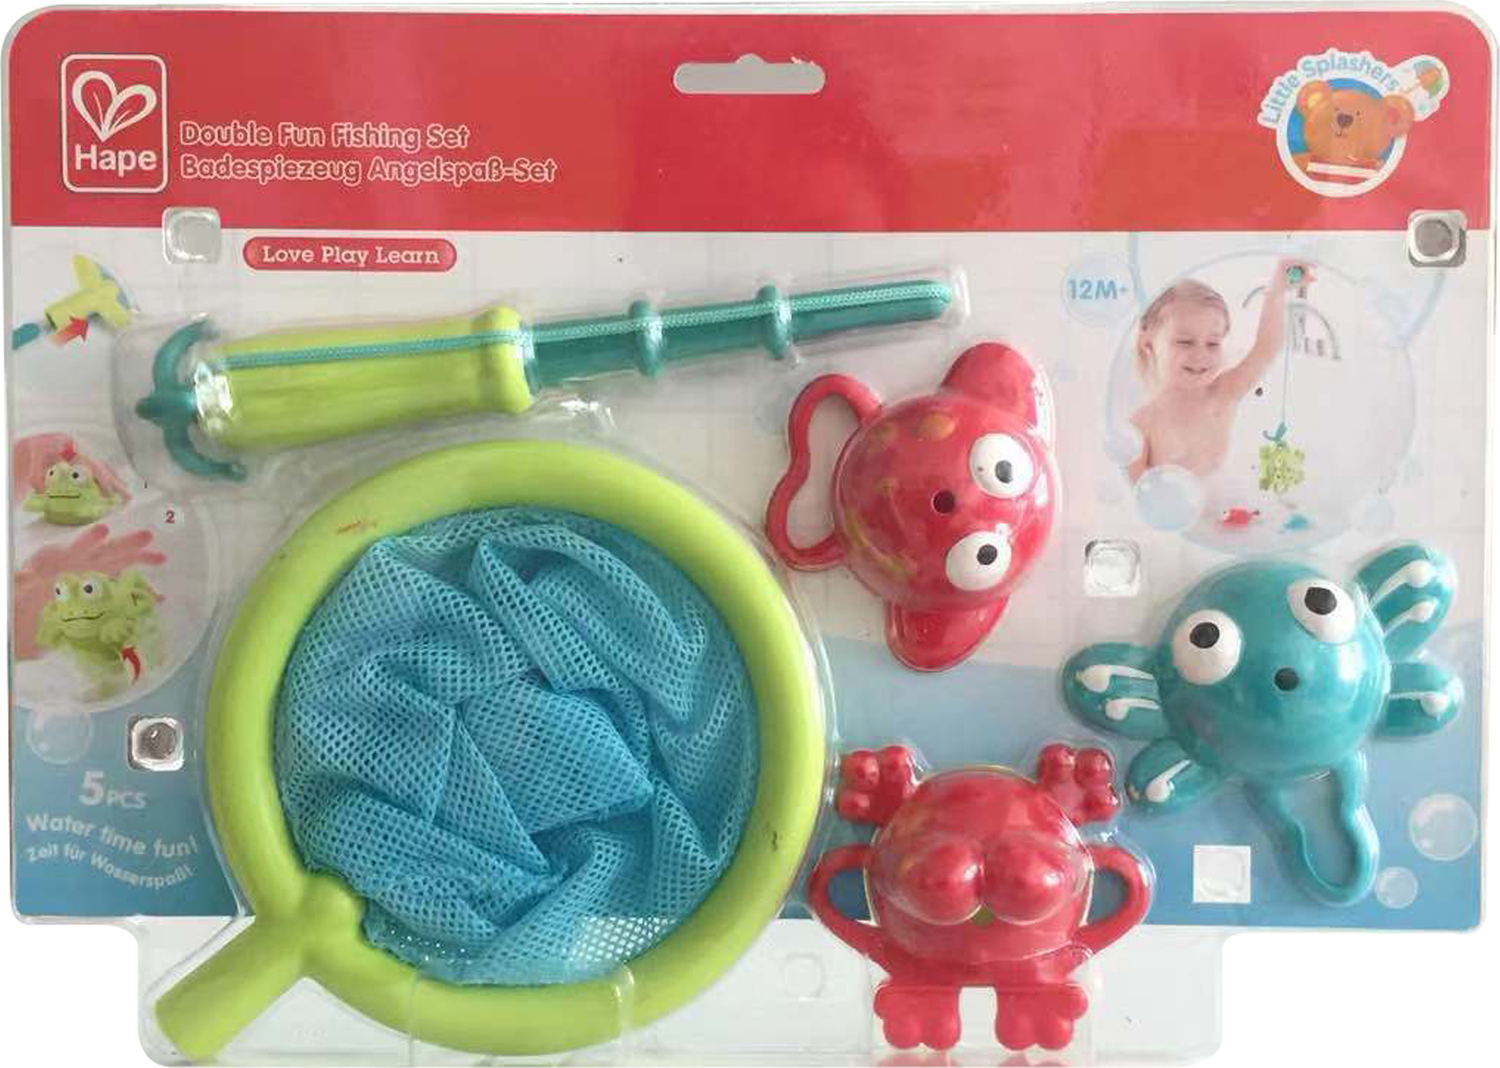 Double Fun Fishing Set - Imagination Toys